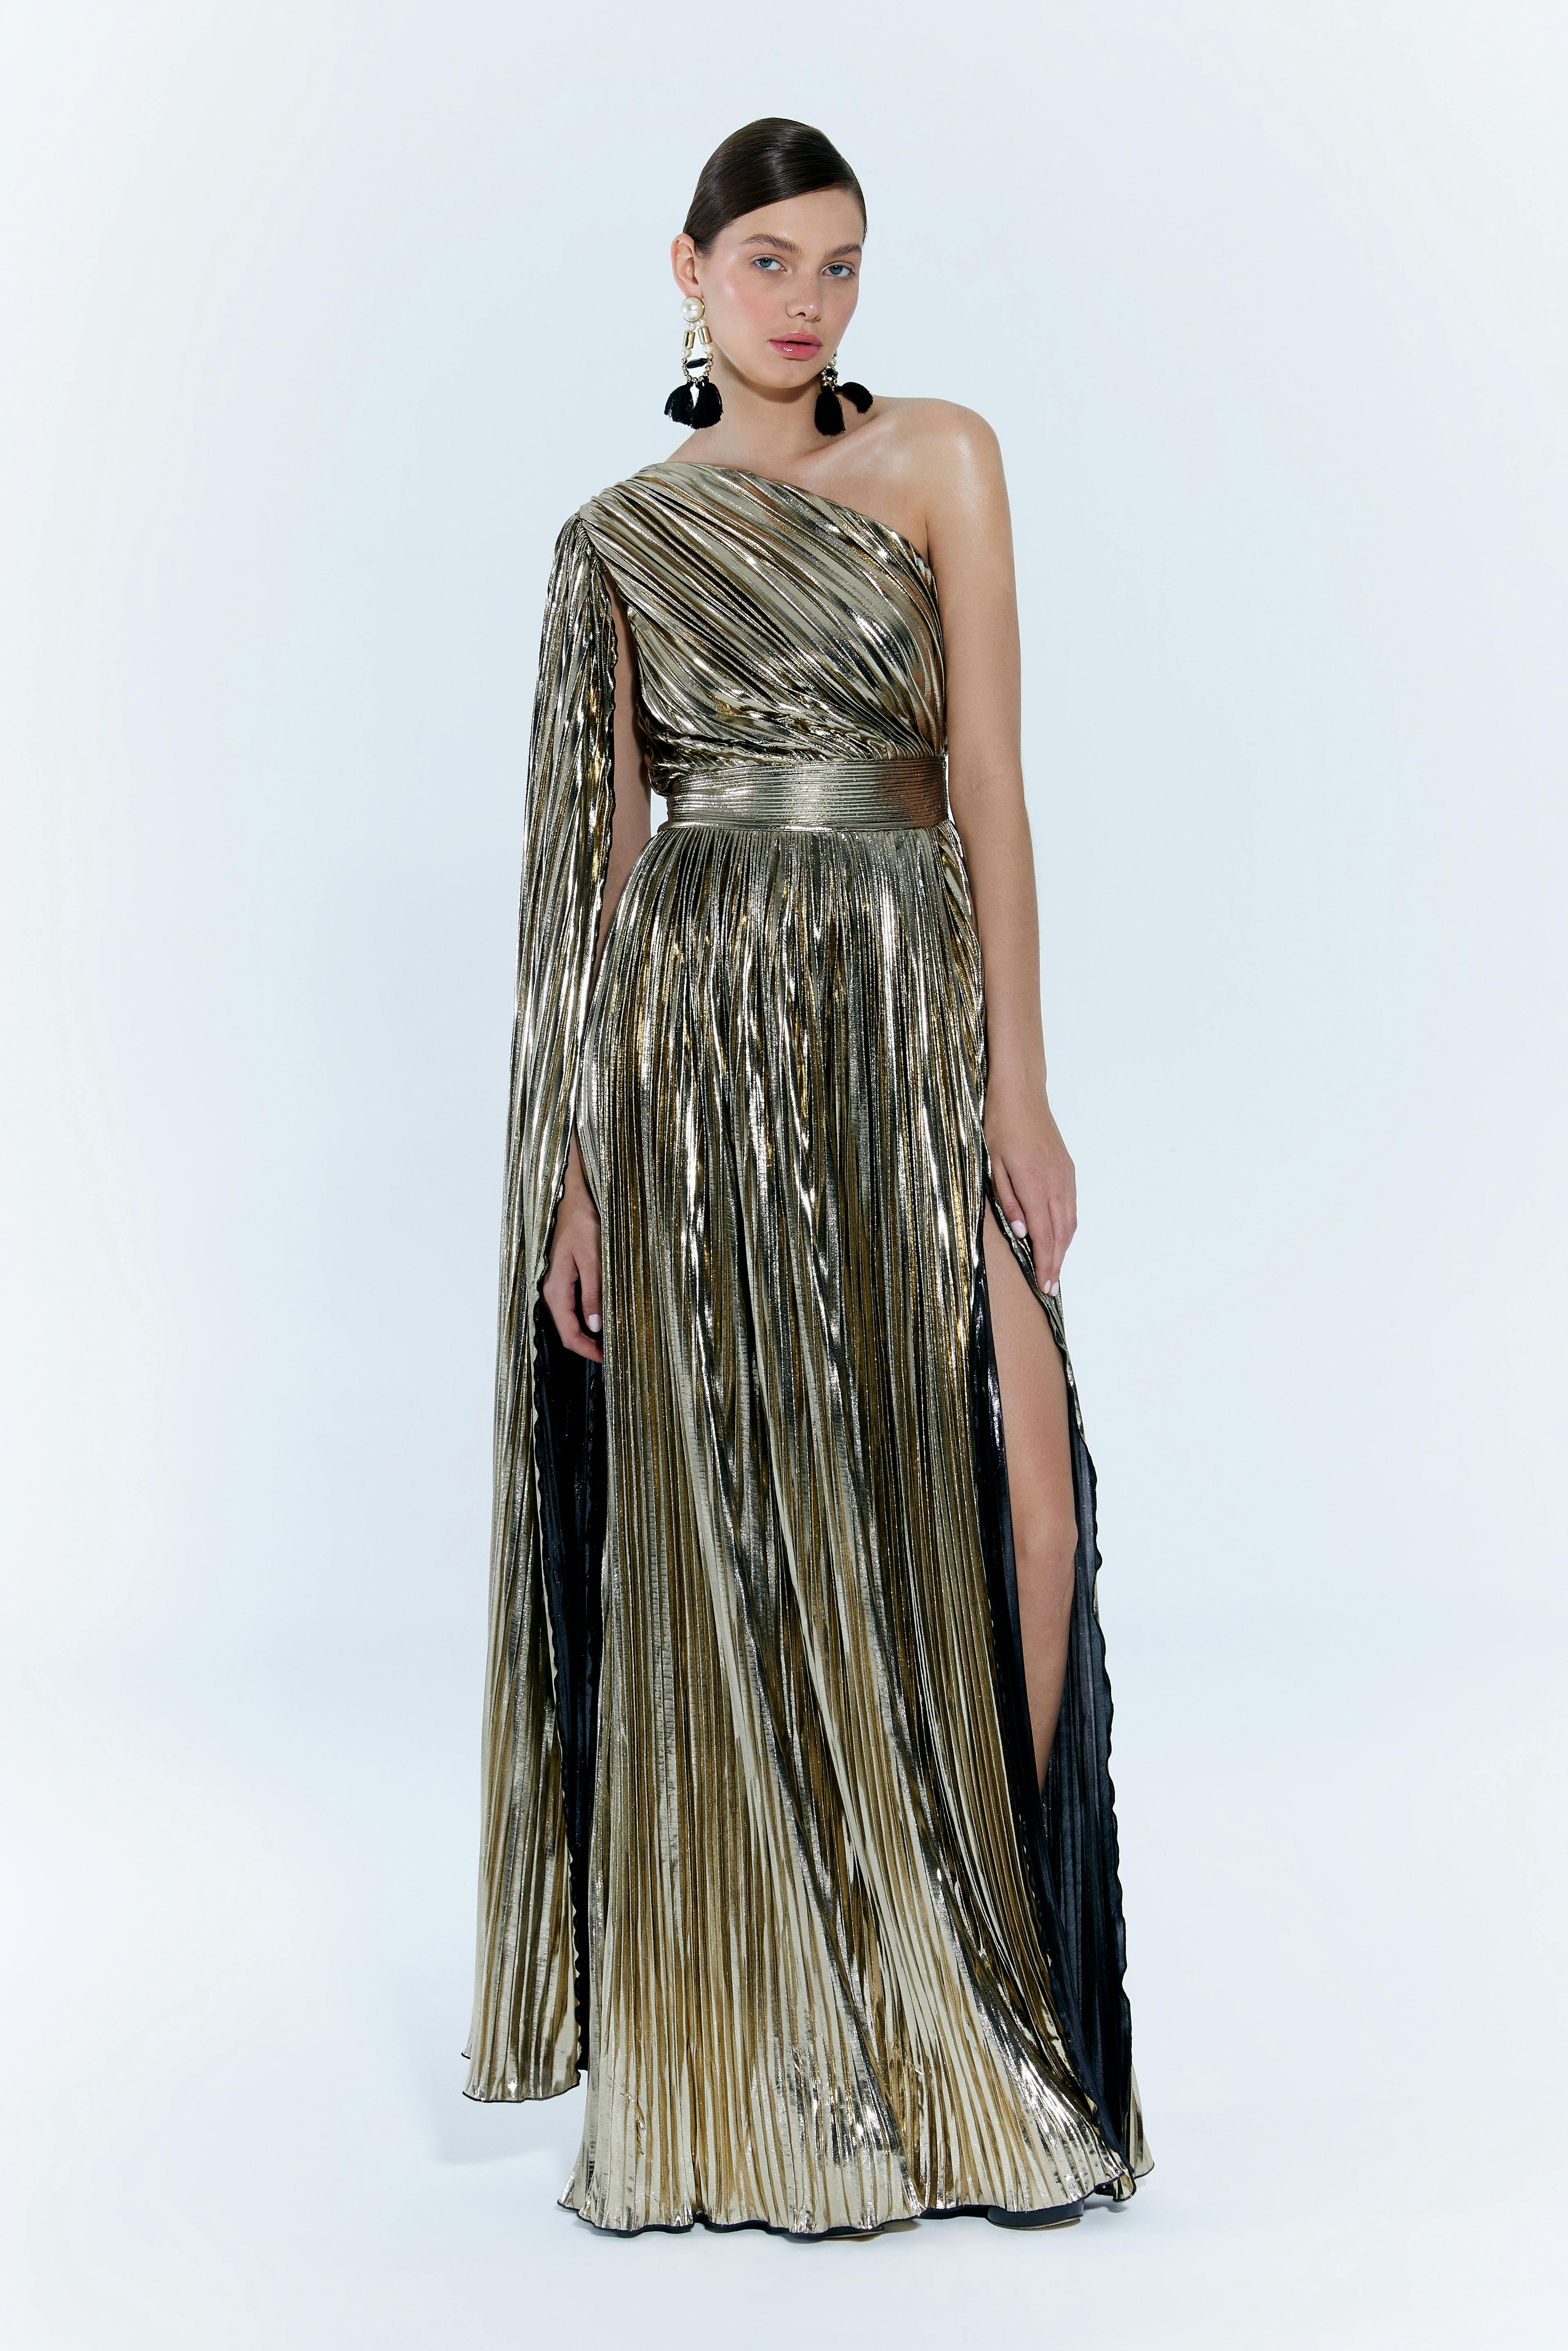 Baglioni Gown, a product by Nur Karaata